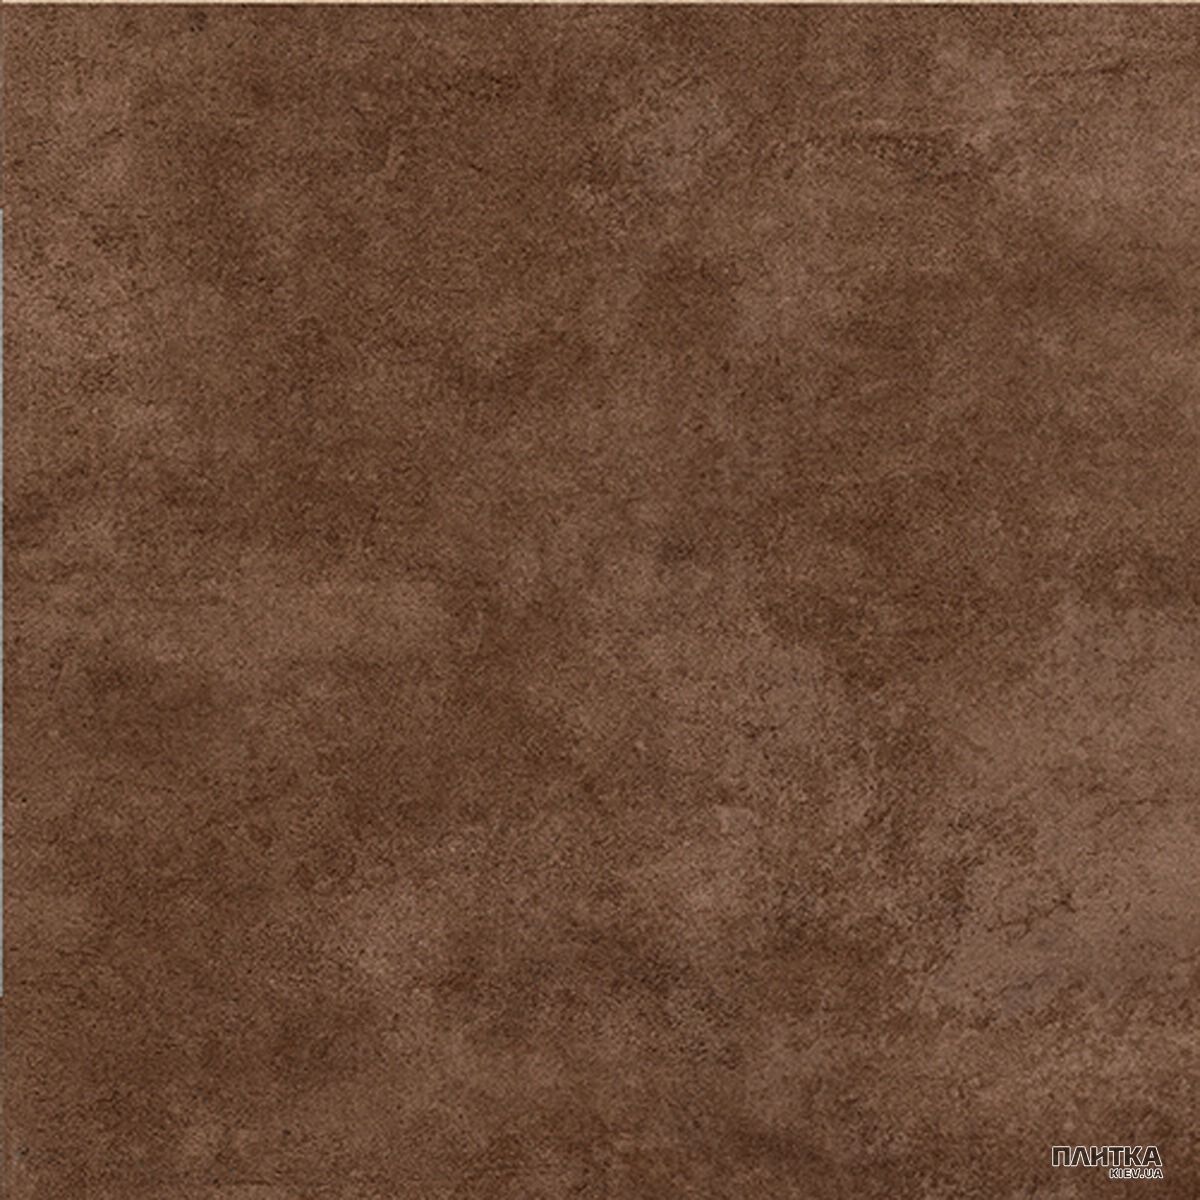 Підлогова плитка Golden Tile Africa AFRICA Коричневий H17000 коричневий